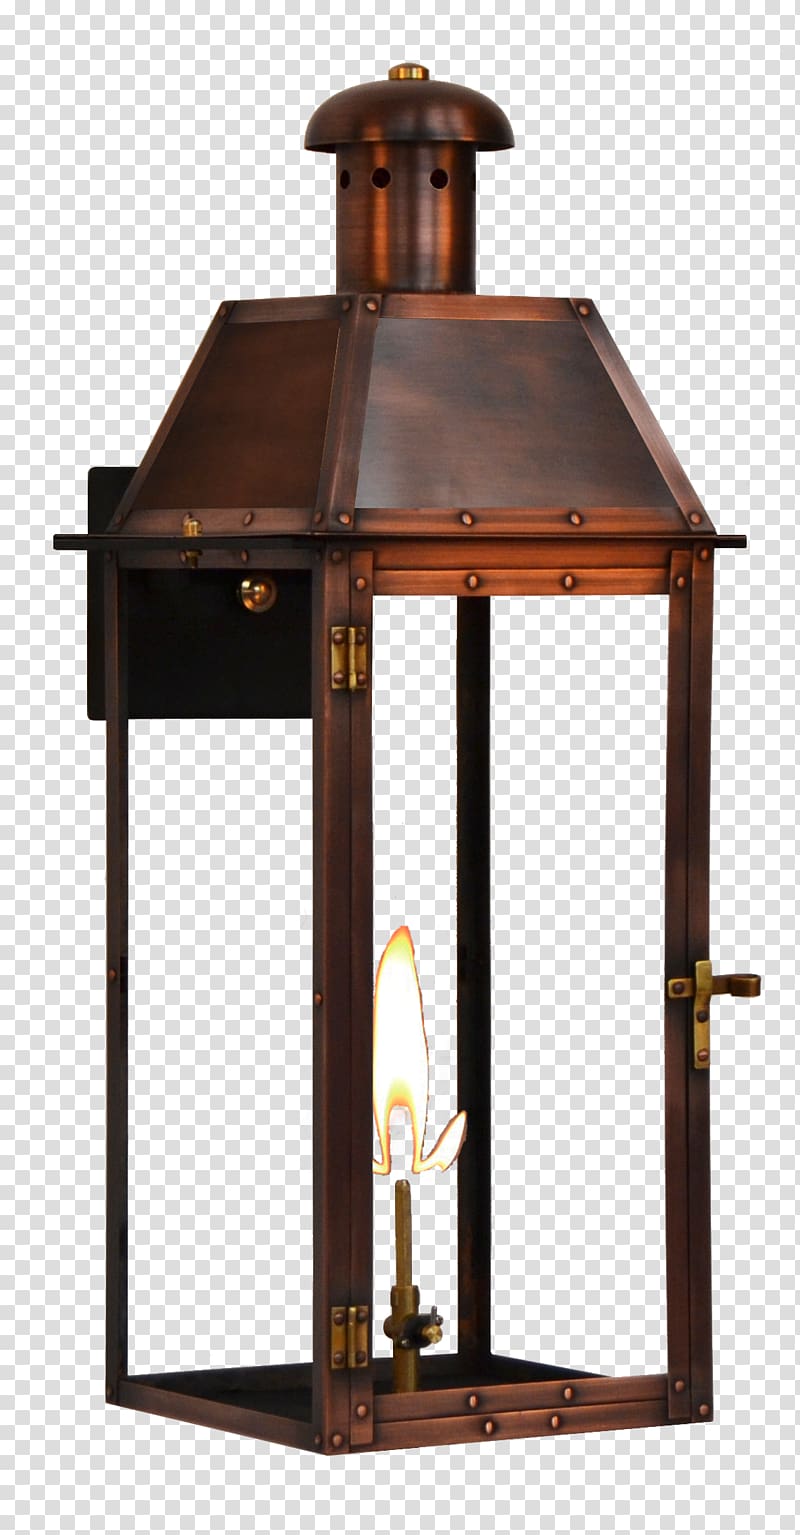 Light Lantern Coppersmith Paper, Lantern Light transparent background PNG clipart